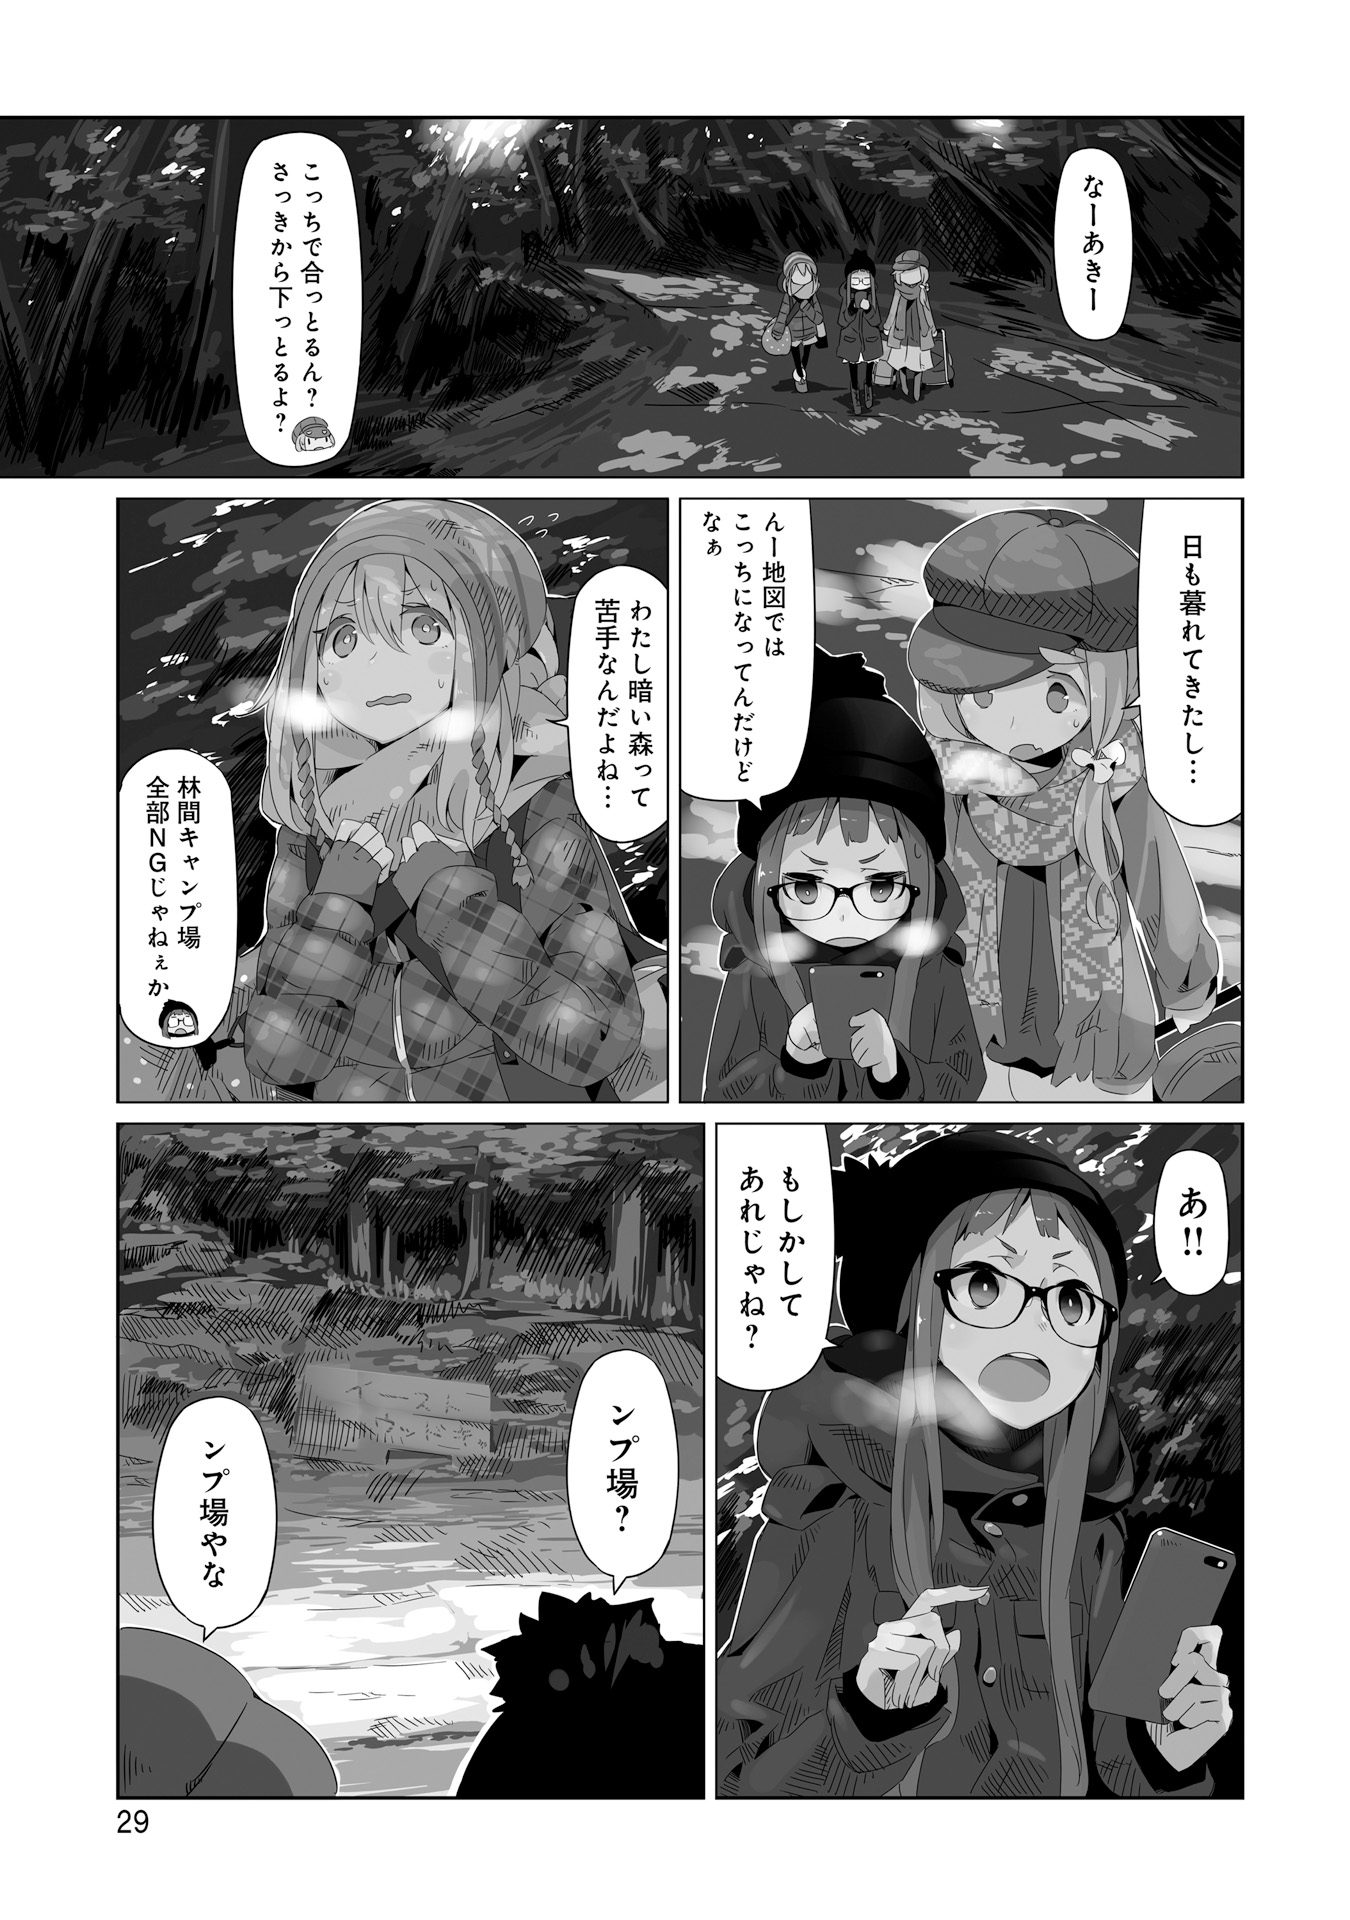 Yuru Camp - Chapter 8 - Page 1